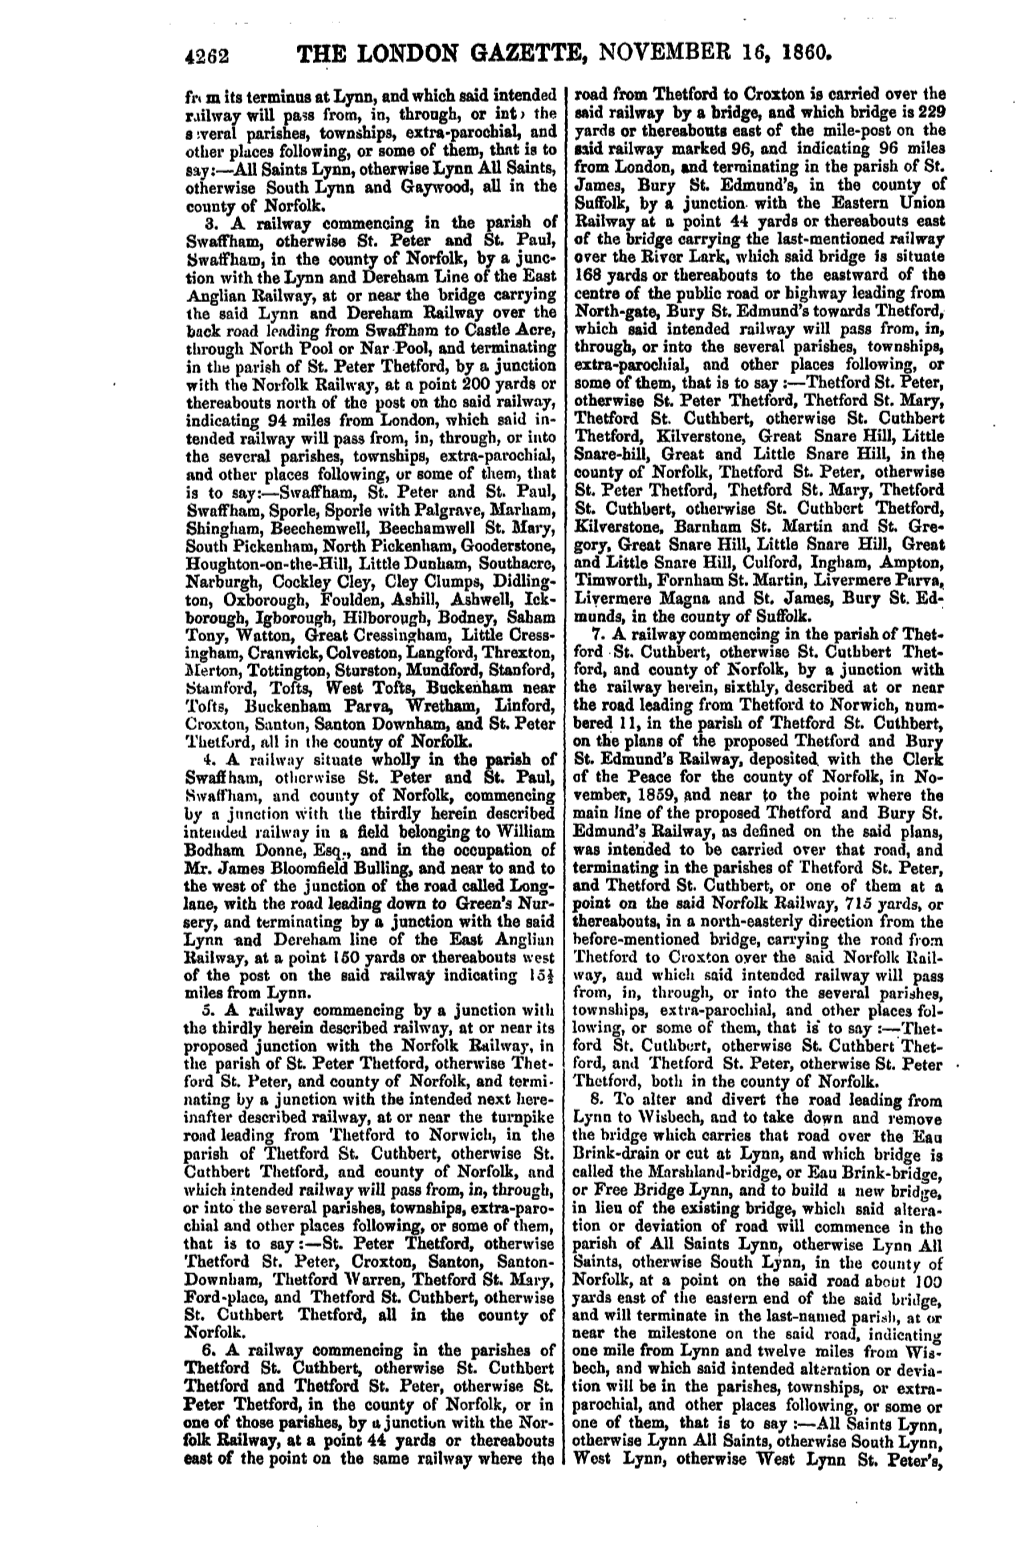 The London Gazette, November 16, 1860